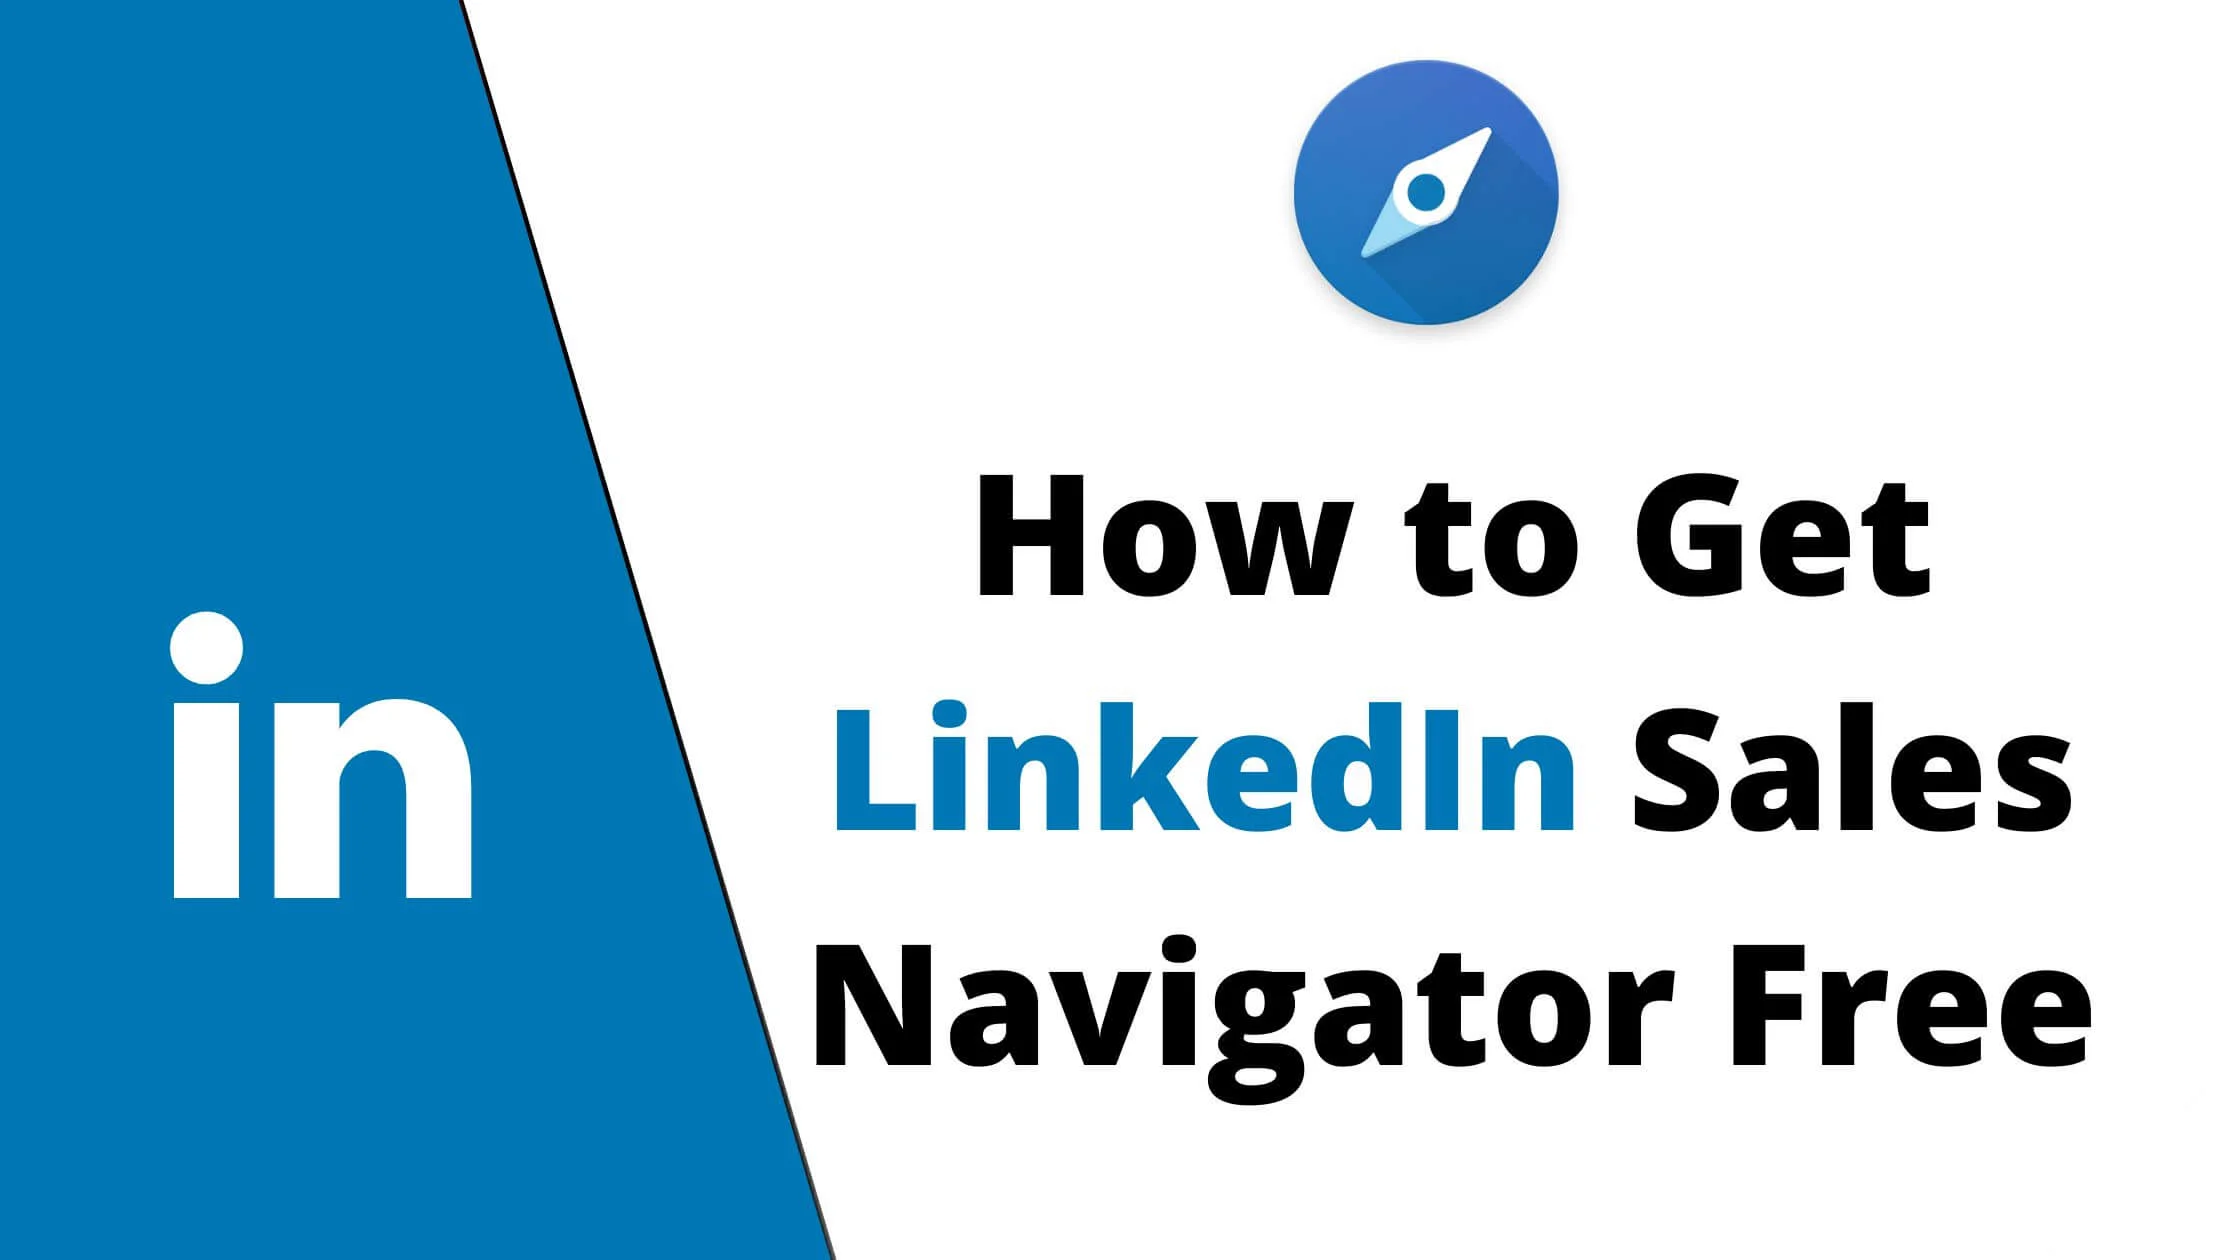 How to Get LinkedIn Sales Navigator Free